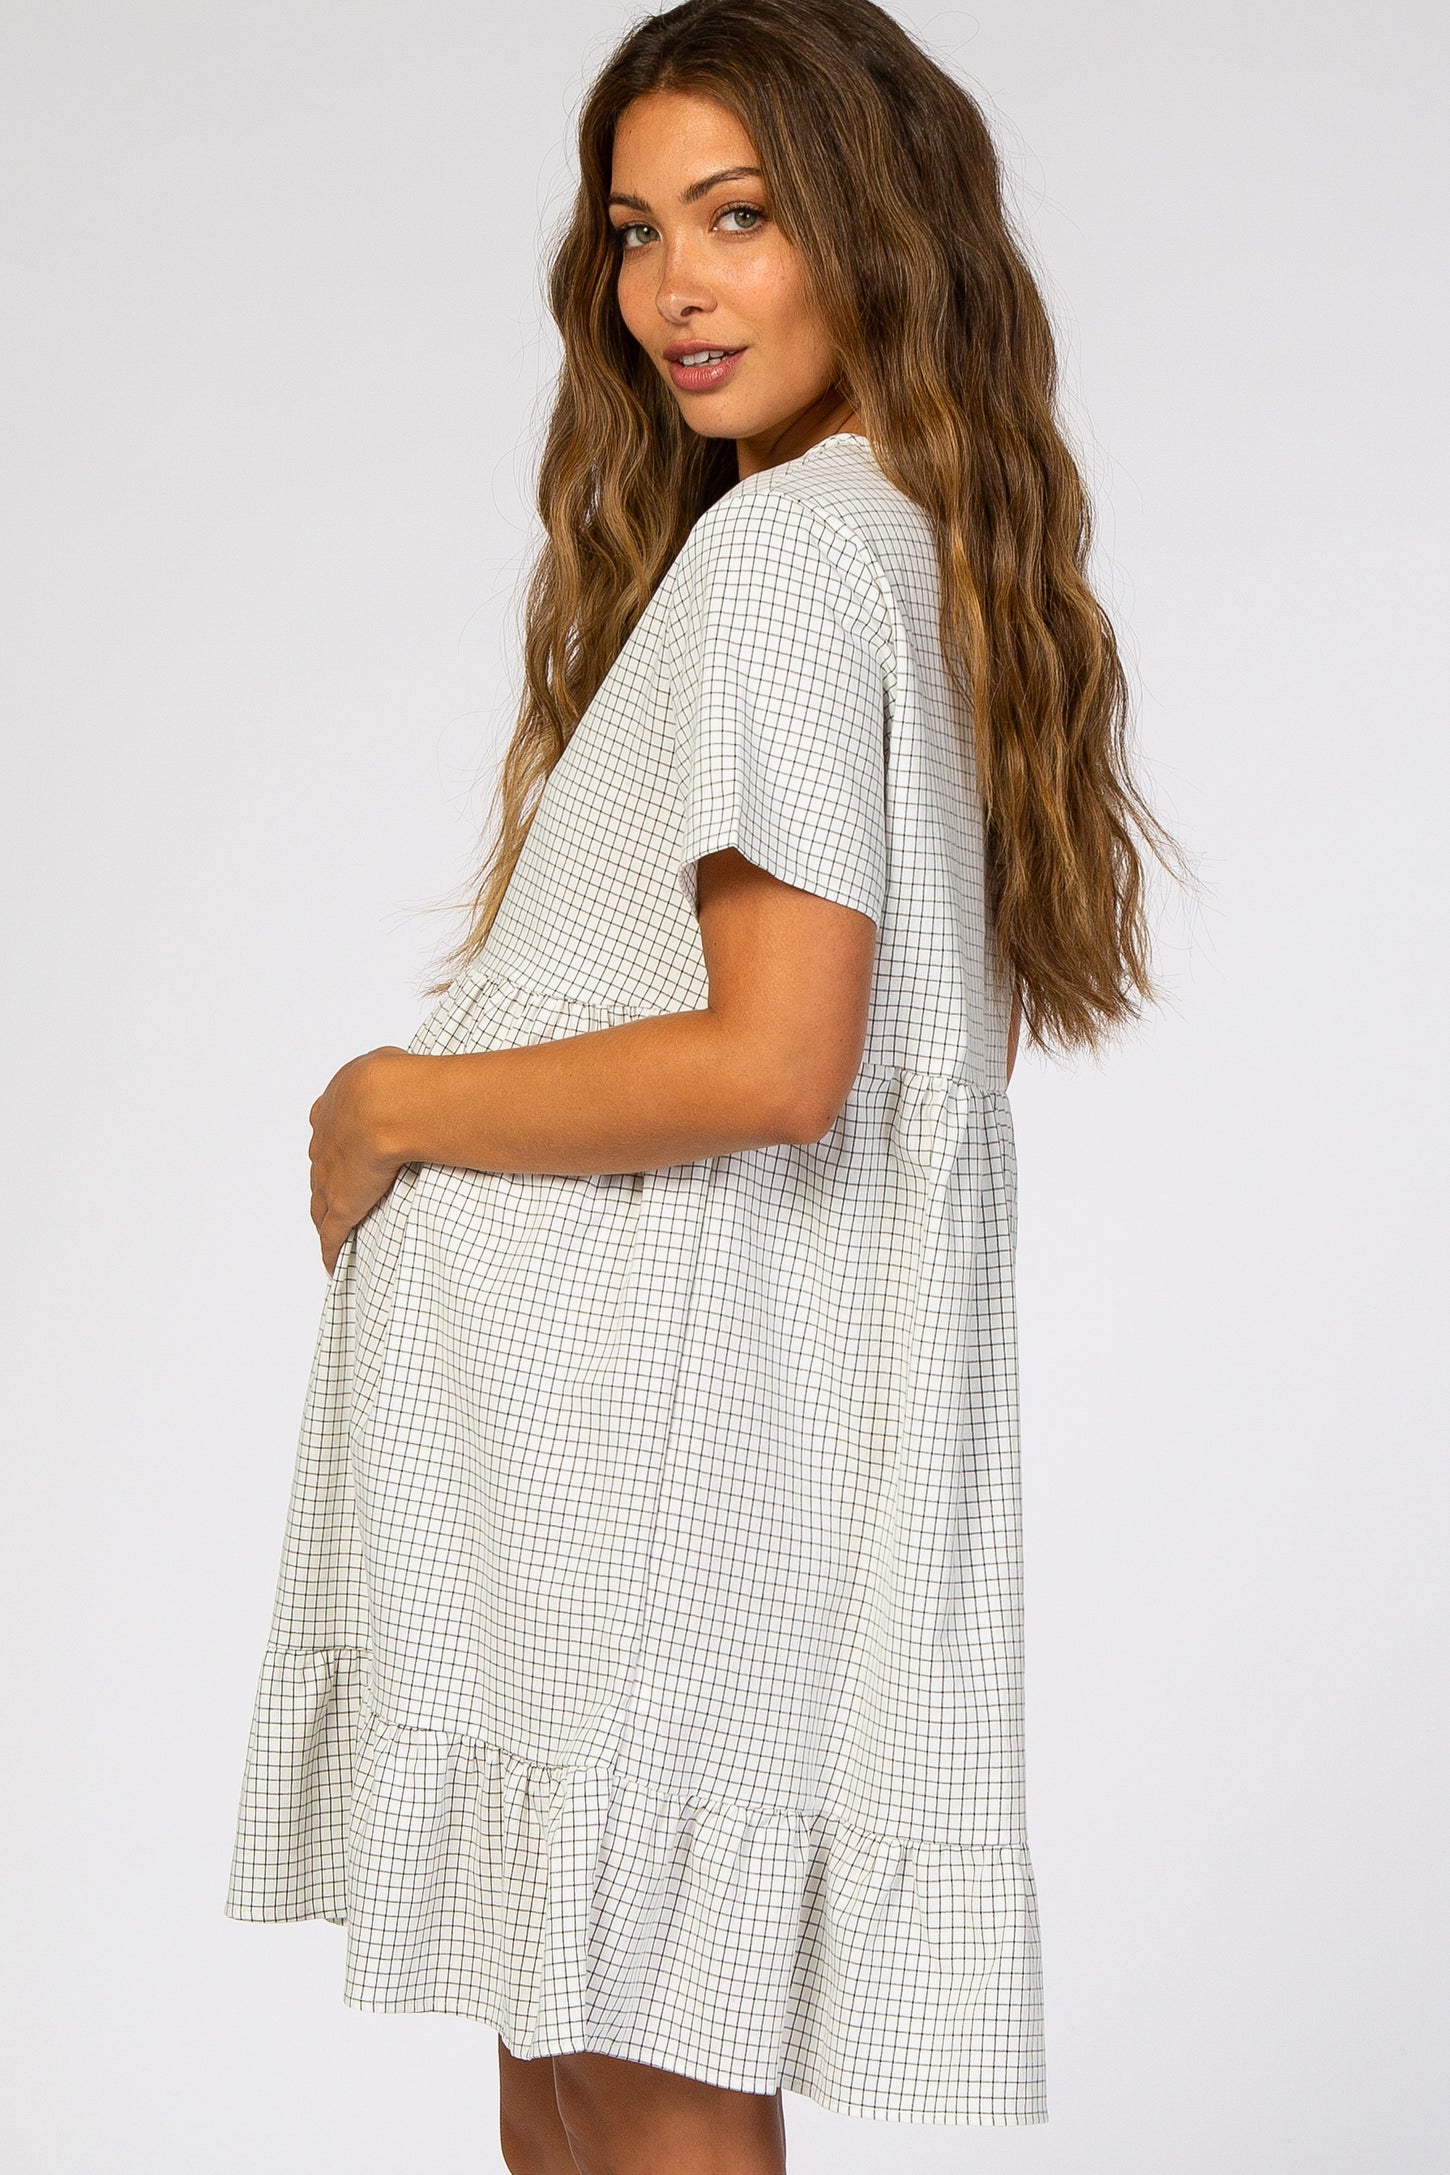 Ivory Grid Printed Ruffle Trim Maternity Dress